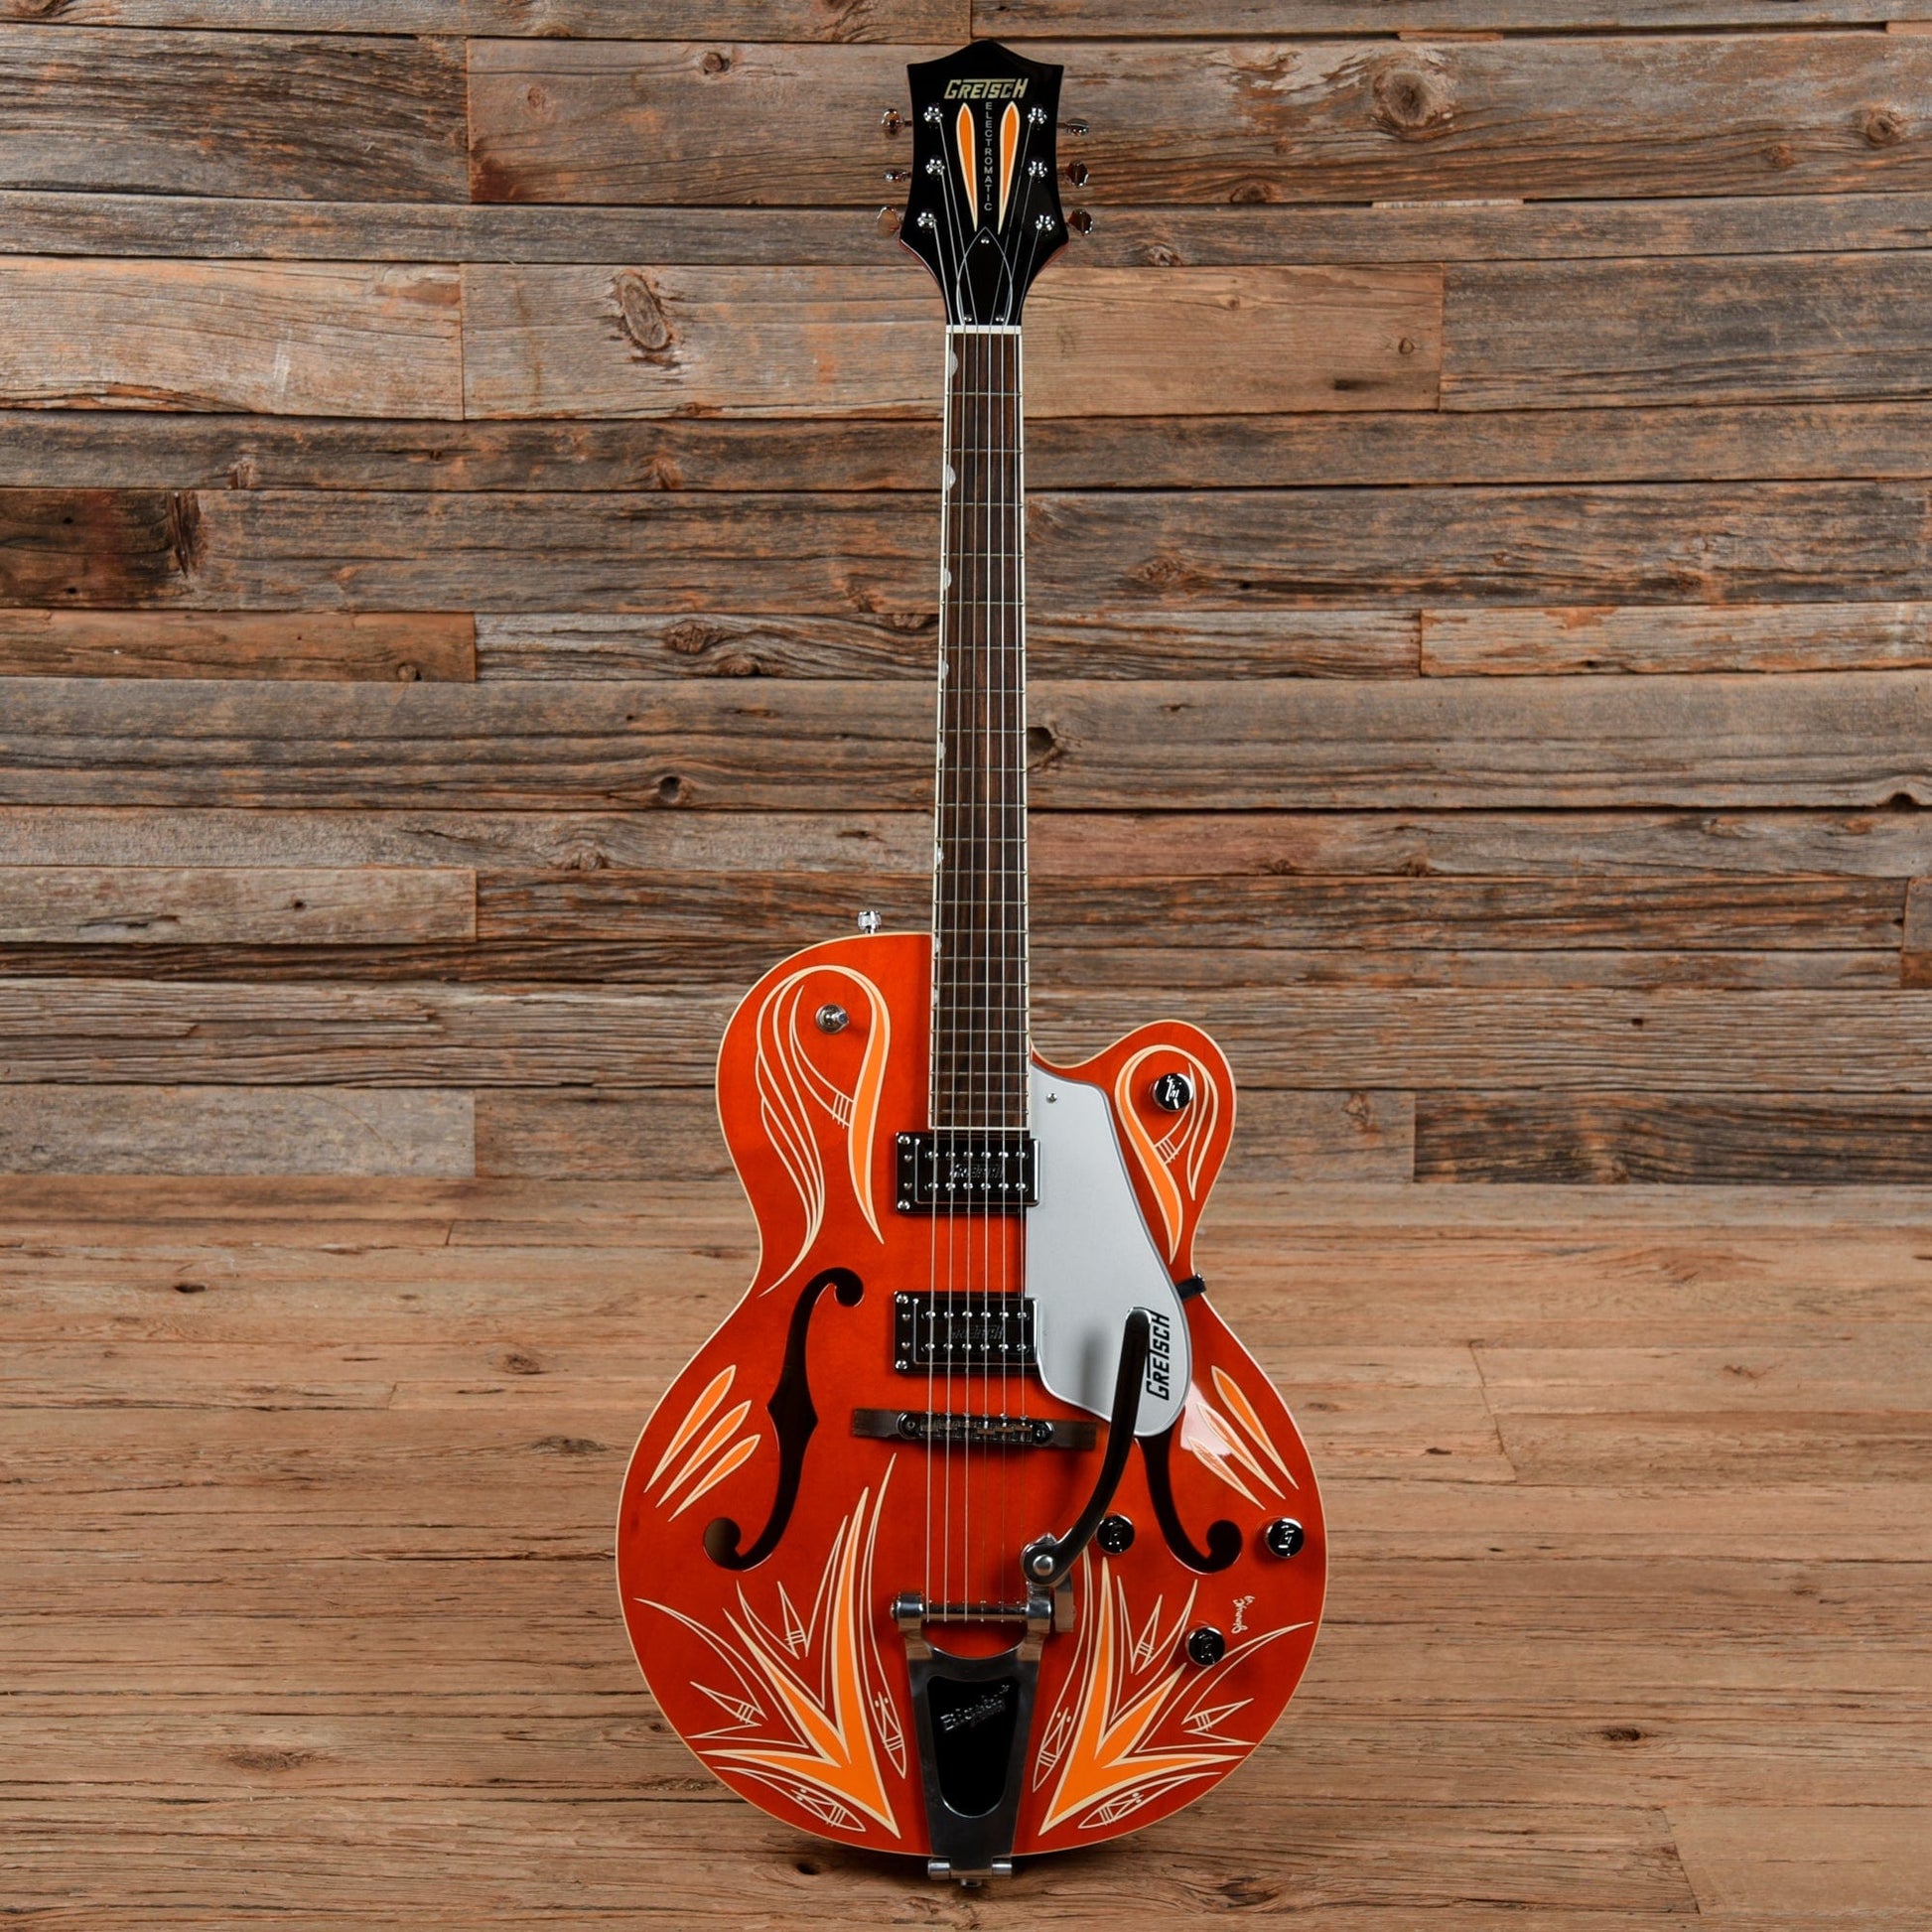 Gretsch Limited Edition G5120 Jimmy C Pinstripe Orange 2009 Electric Guitars / Hollow Body